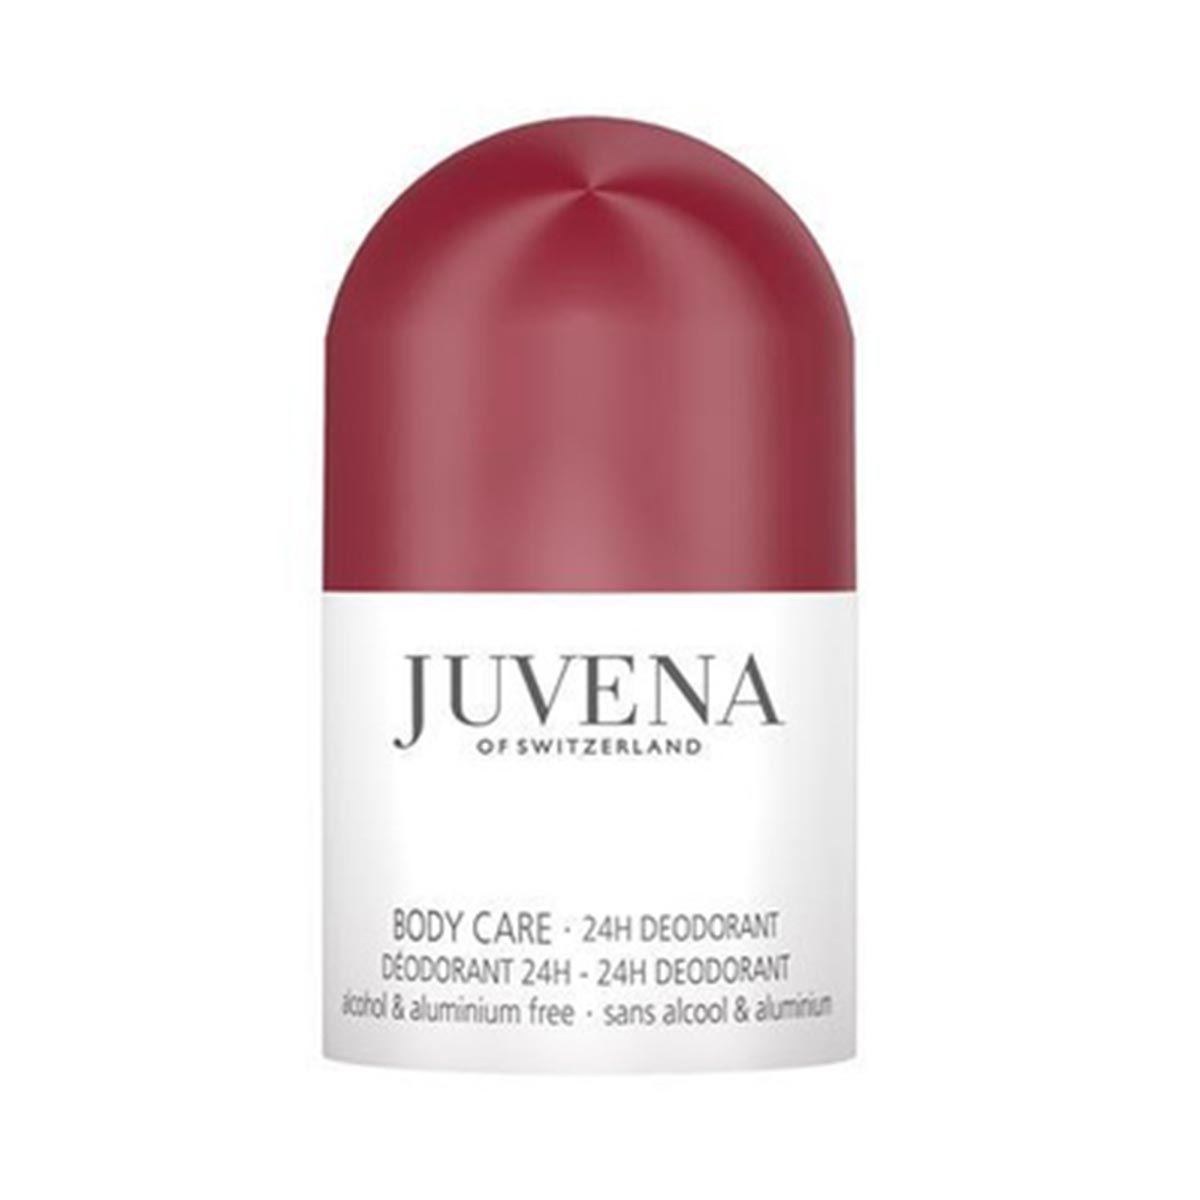 Image of Juvena Body Care 24h Deodorant 50ml